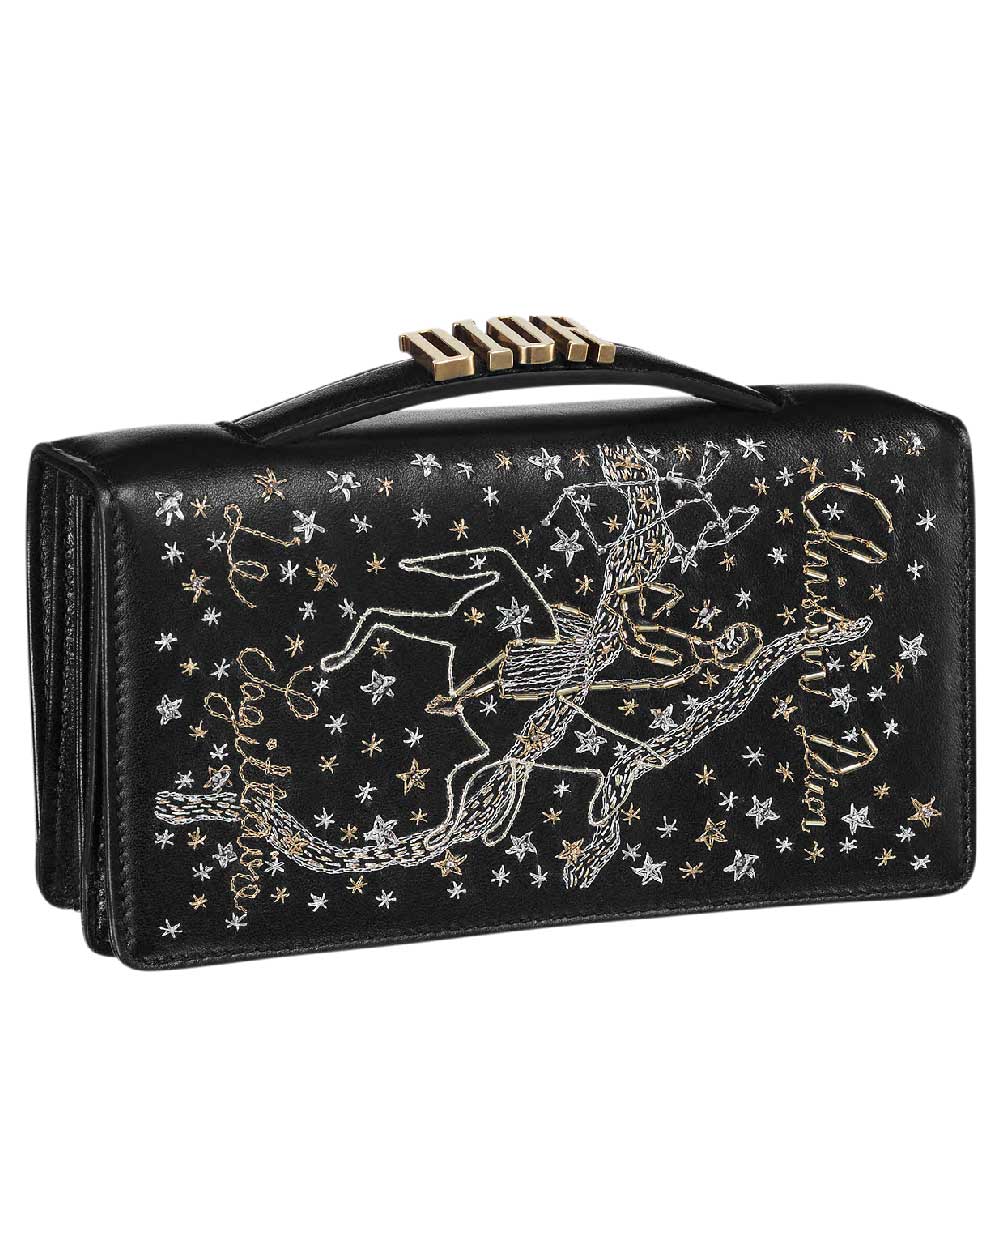 Christian Dior handbag, $3300